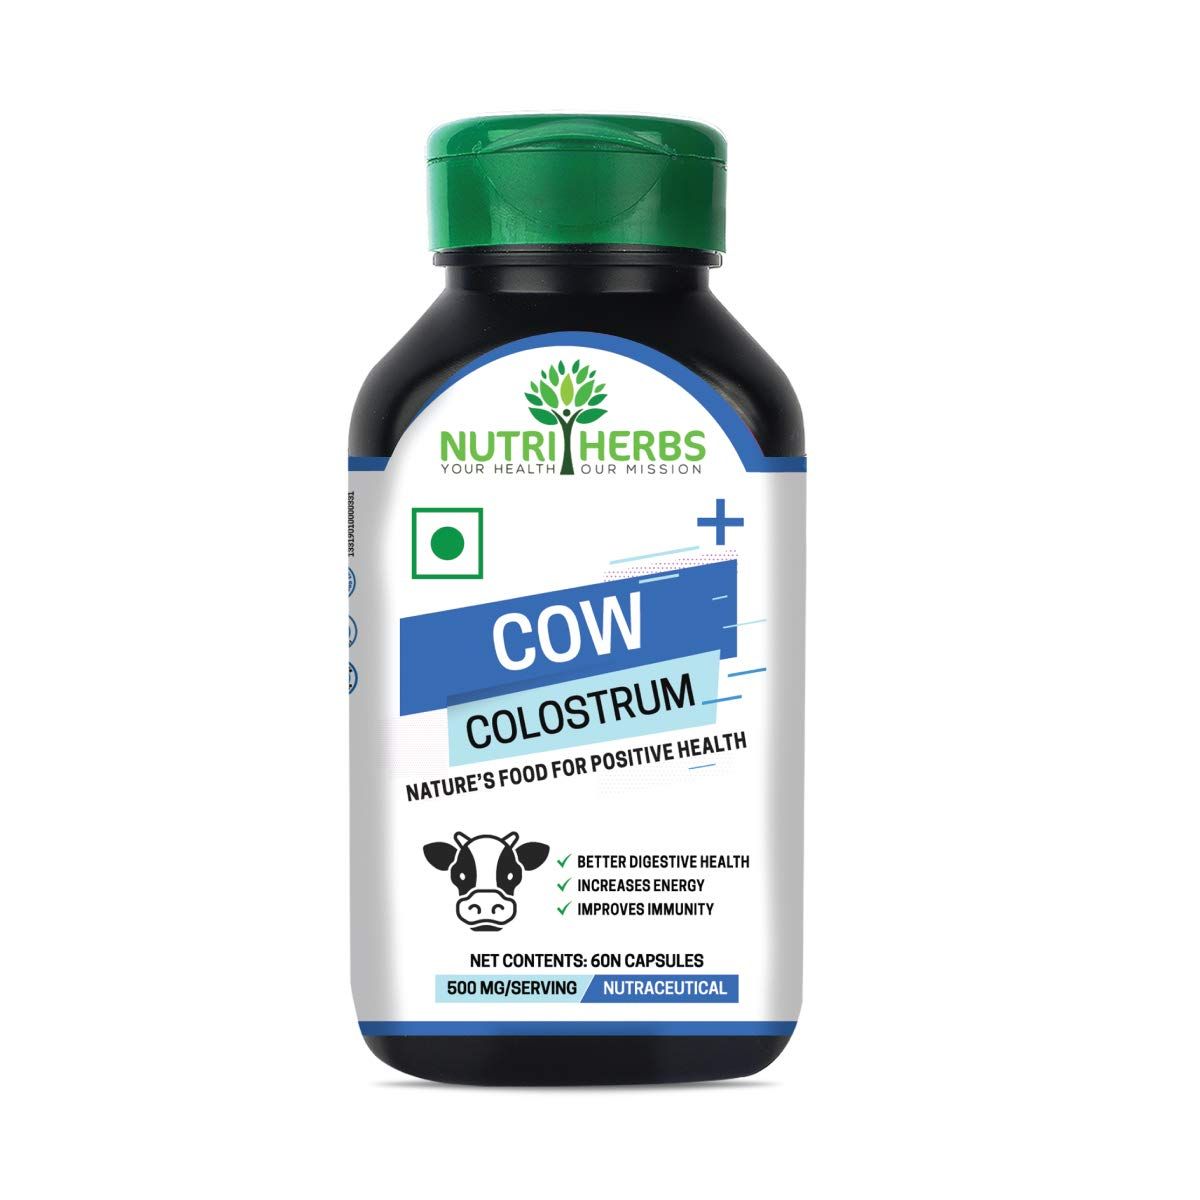 Nutriherbs Cow Colostrum Image